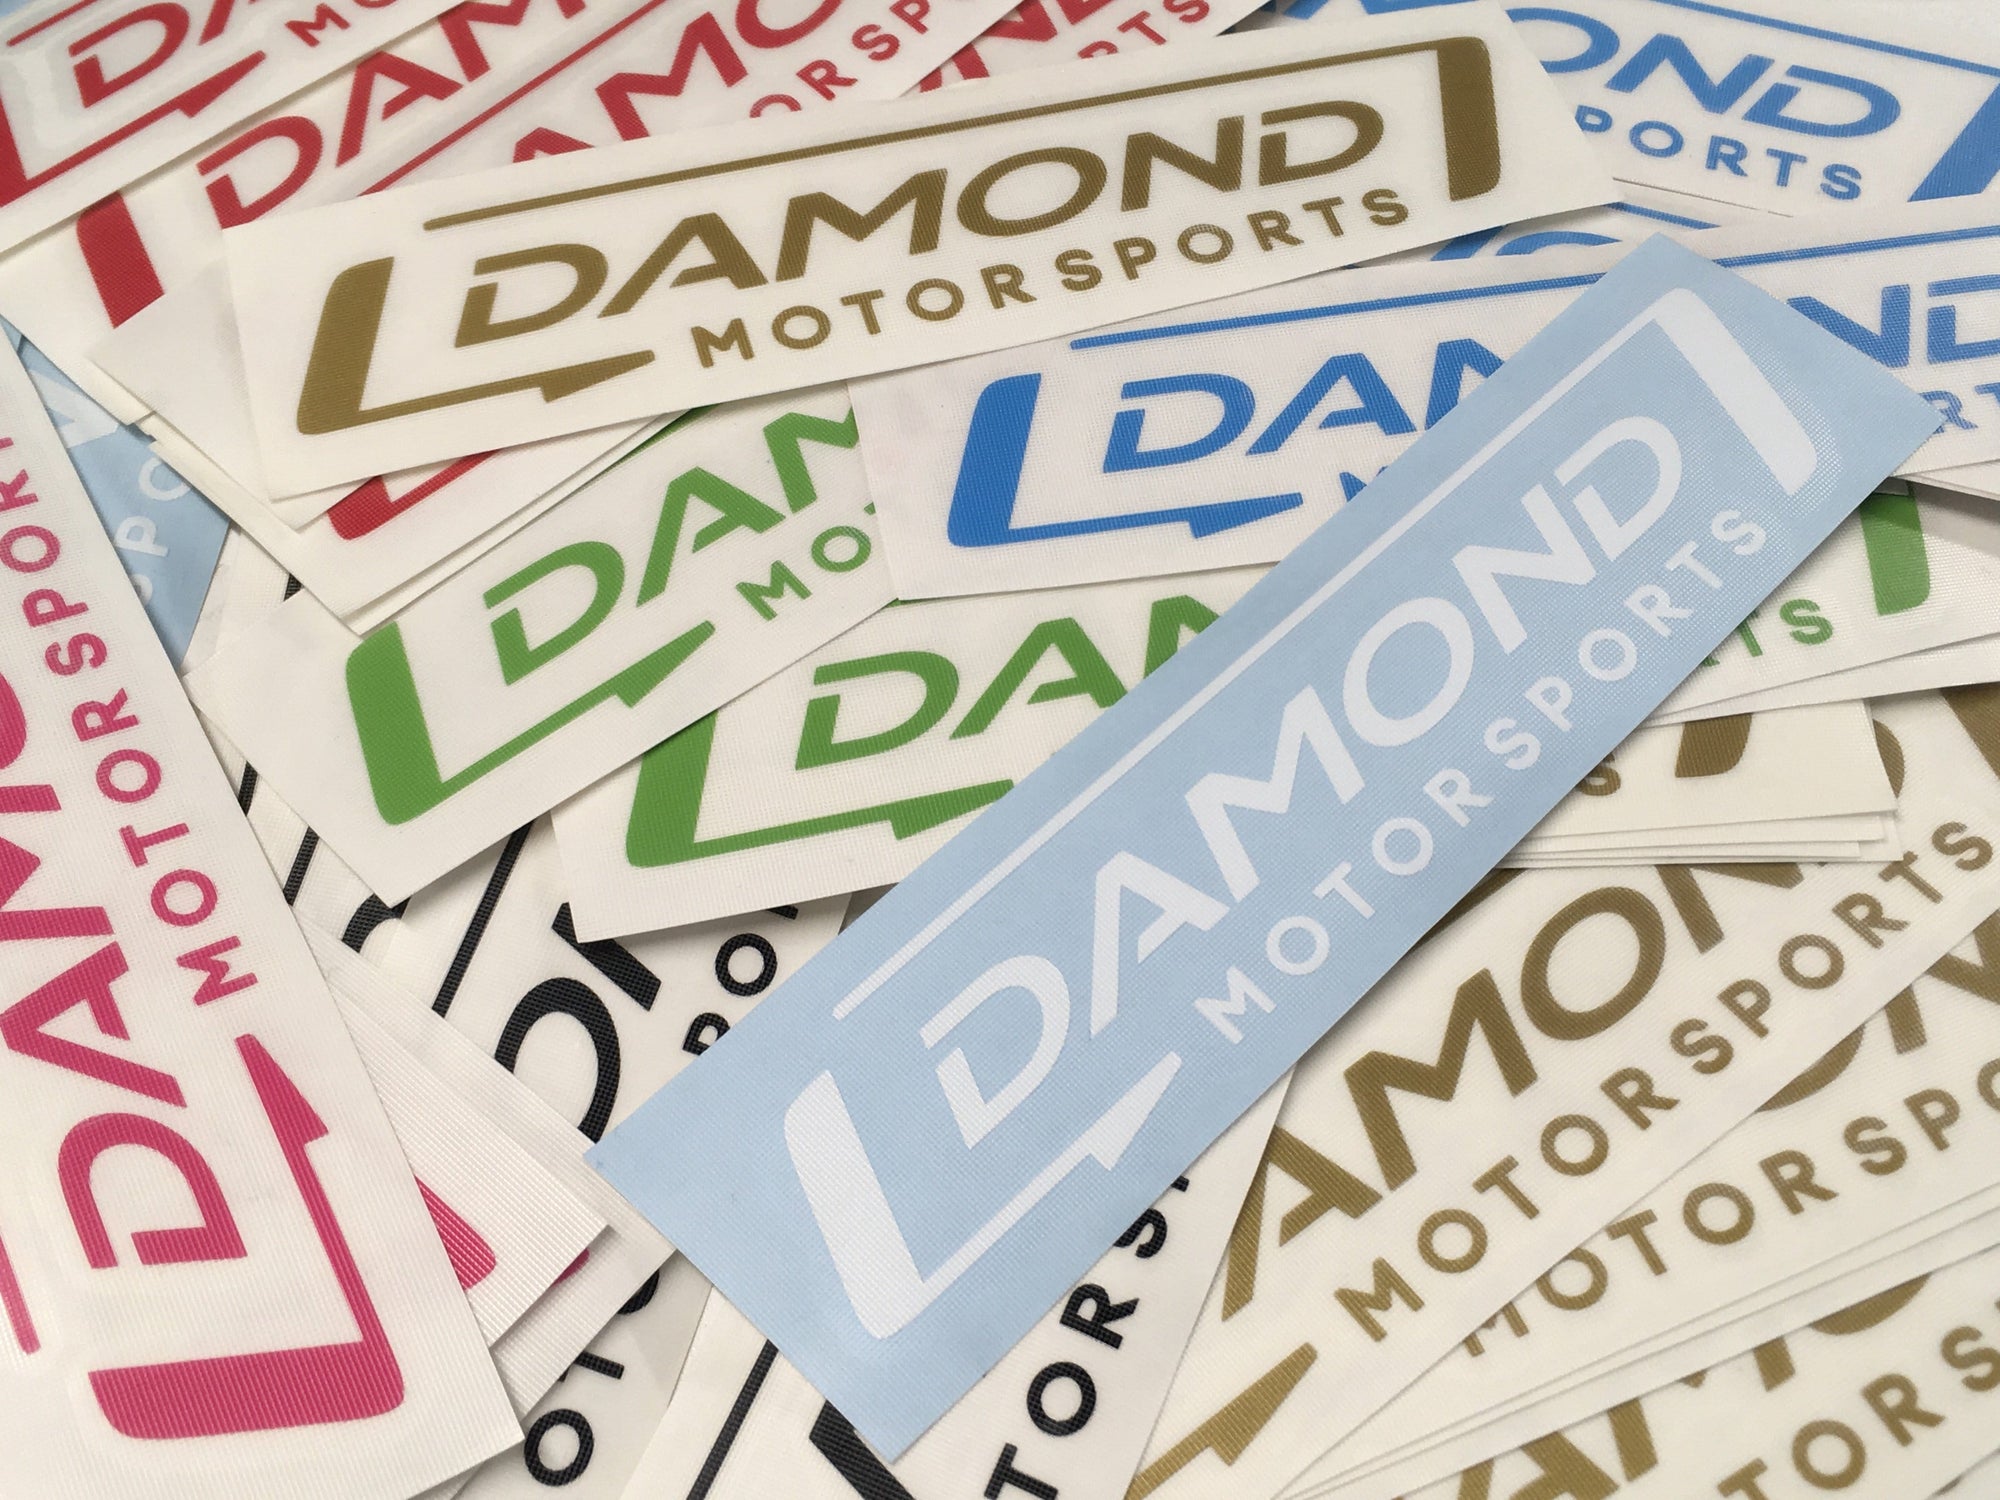 Damond Motorsports-Damond Motorsports 6" Decal Sticker- at Damond Motorsports